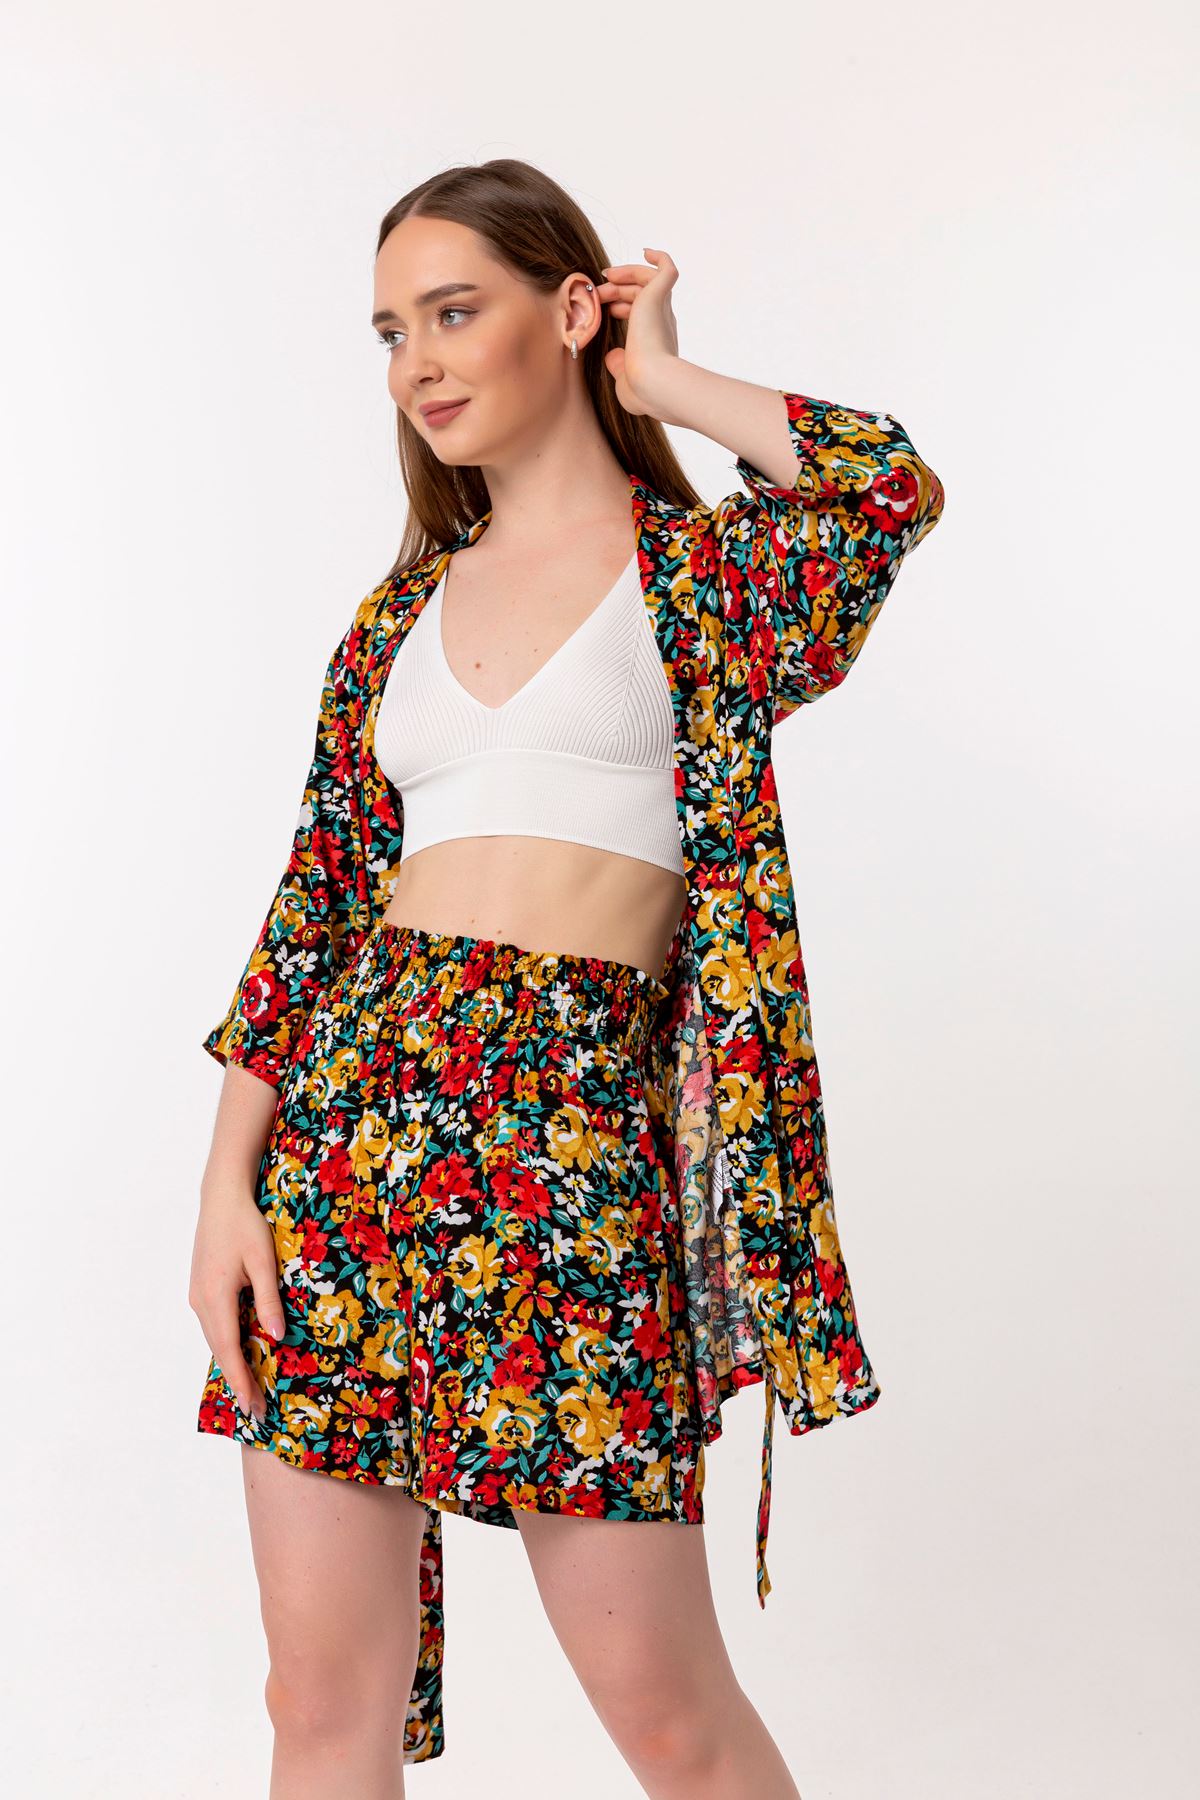 Viscose Fabric Shirt Collar Short Oversize Floral Print Women'S Set 2 Pieces - Mustard